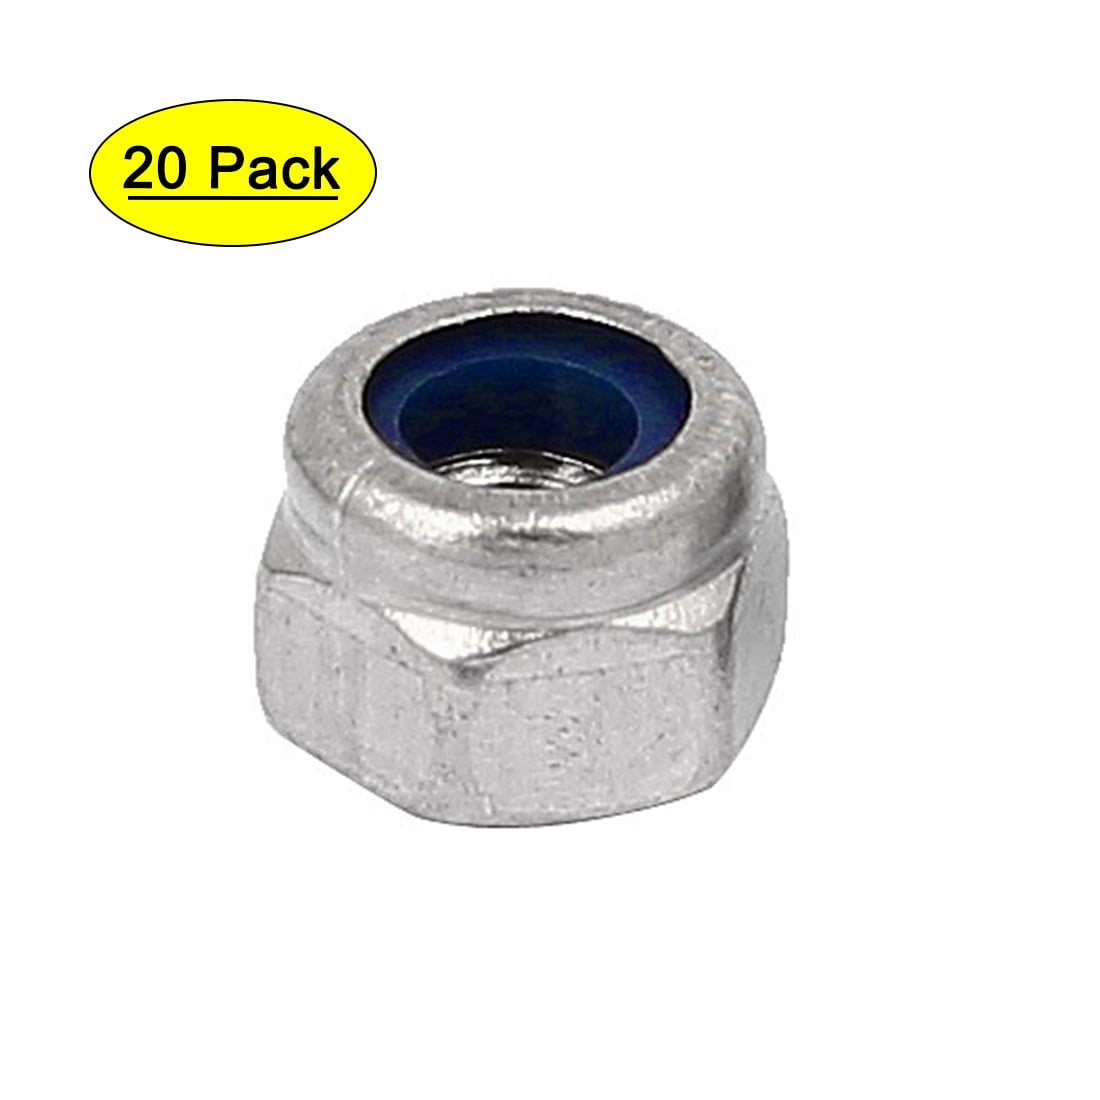 Fine Thread 304 Stainless Steel DIN985 Nylon Insert Lock Nut Hex Nylock Nut 